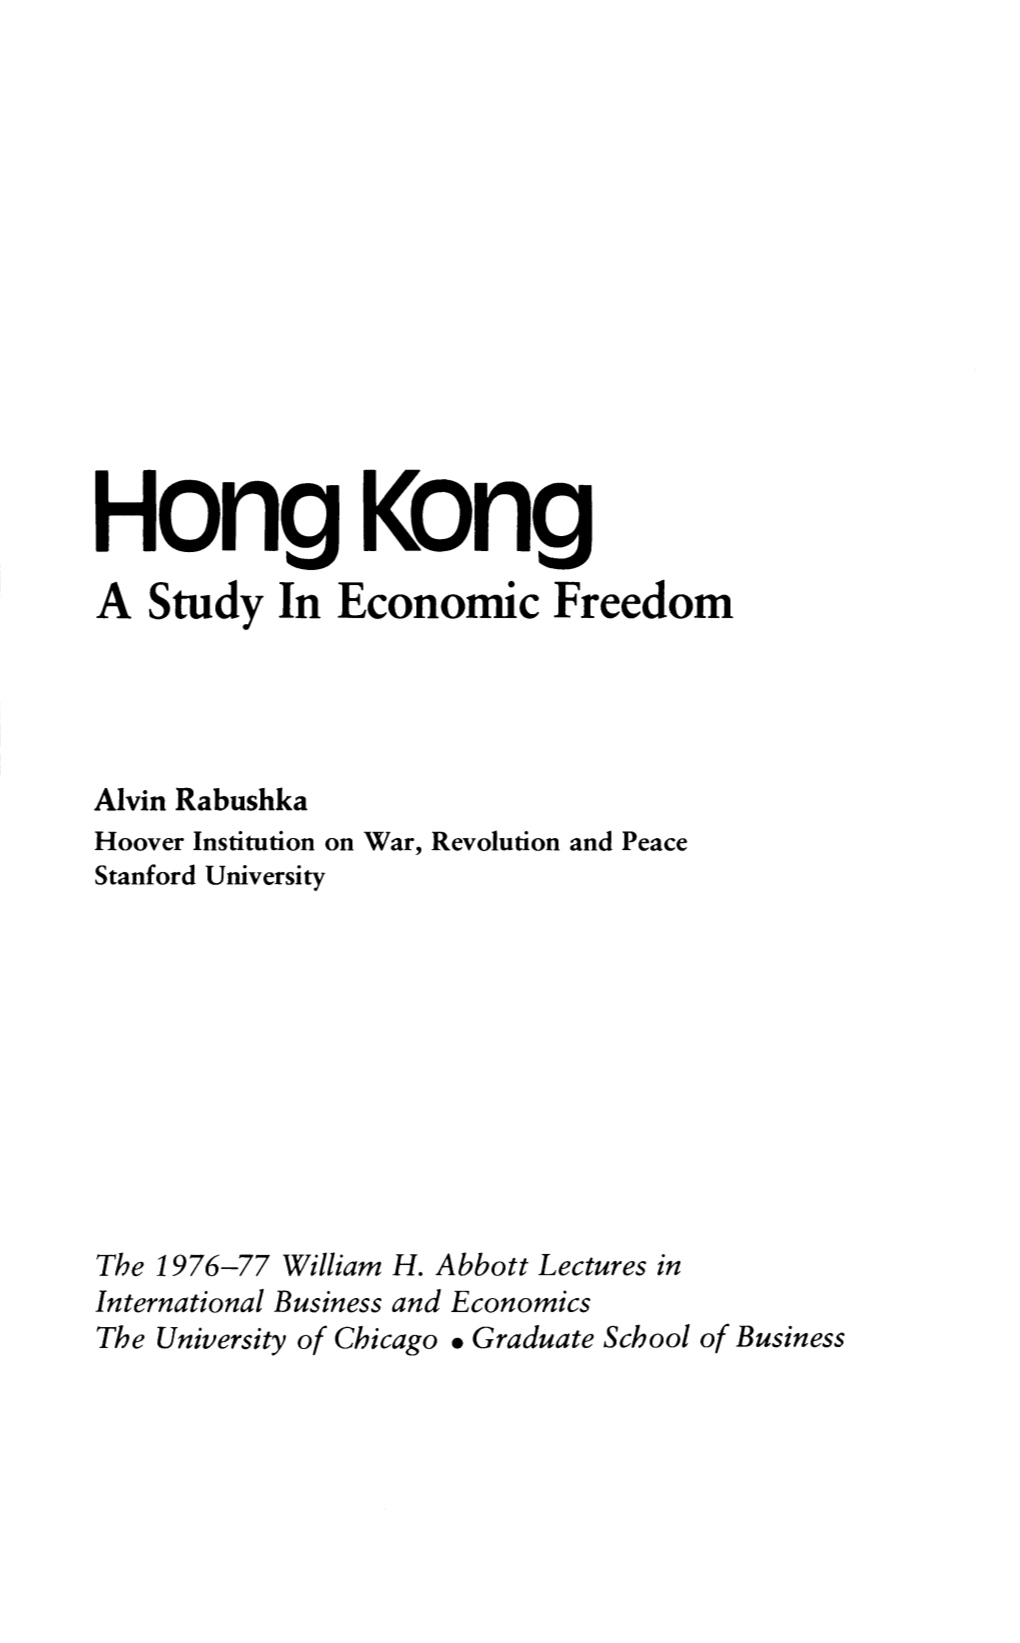 Hongkong a Study in Economic Freedom